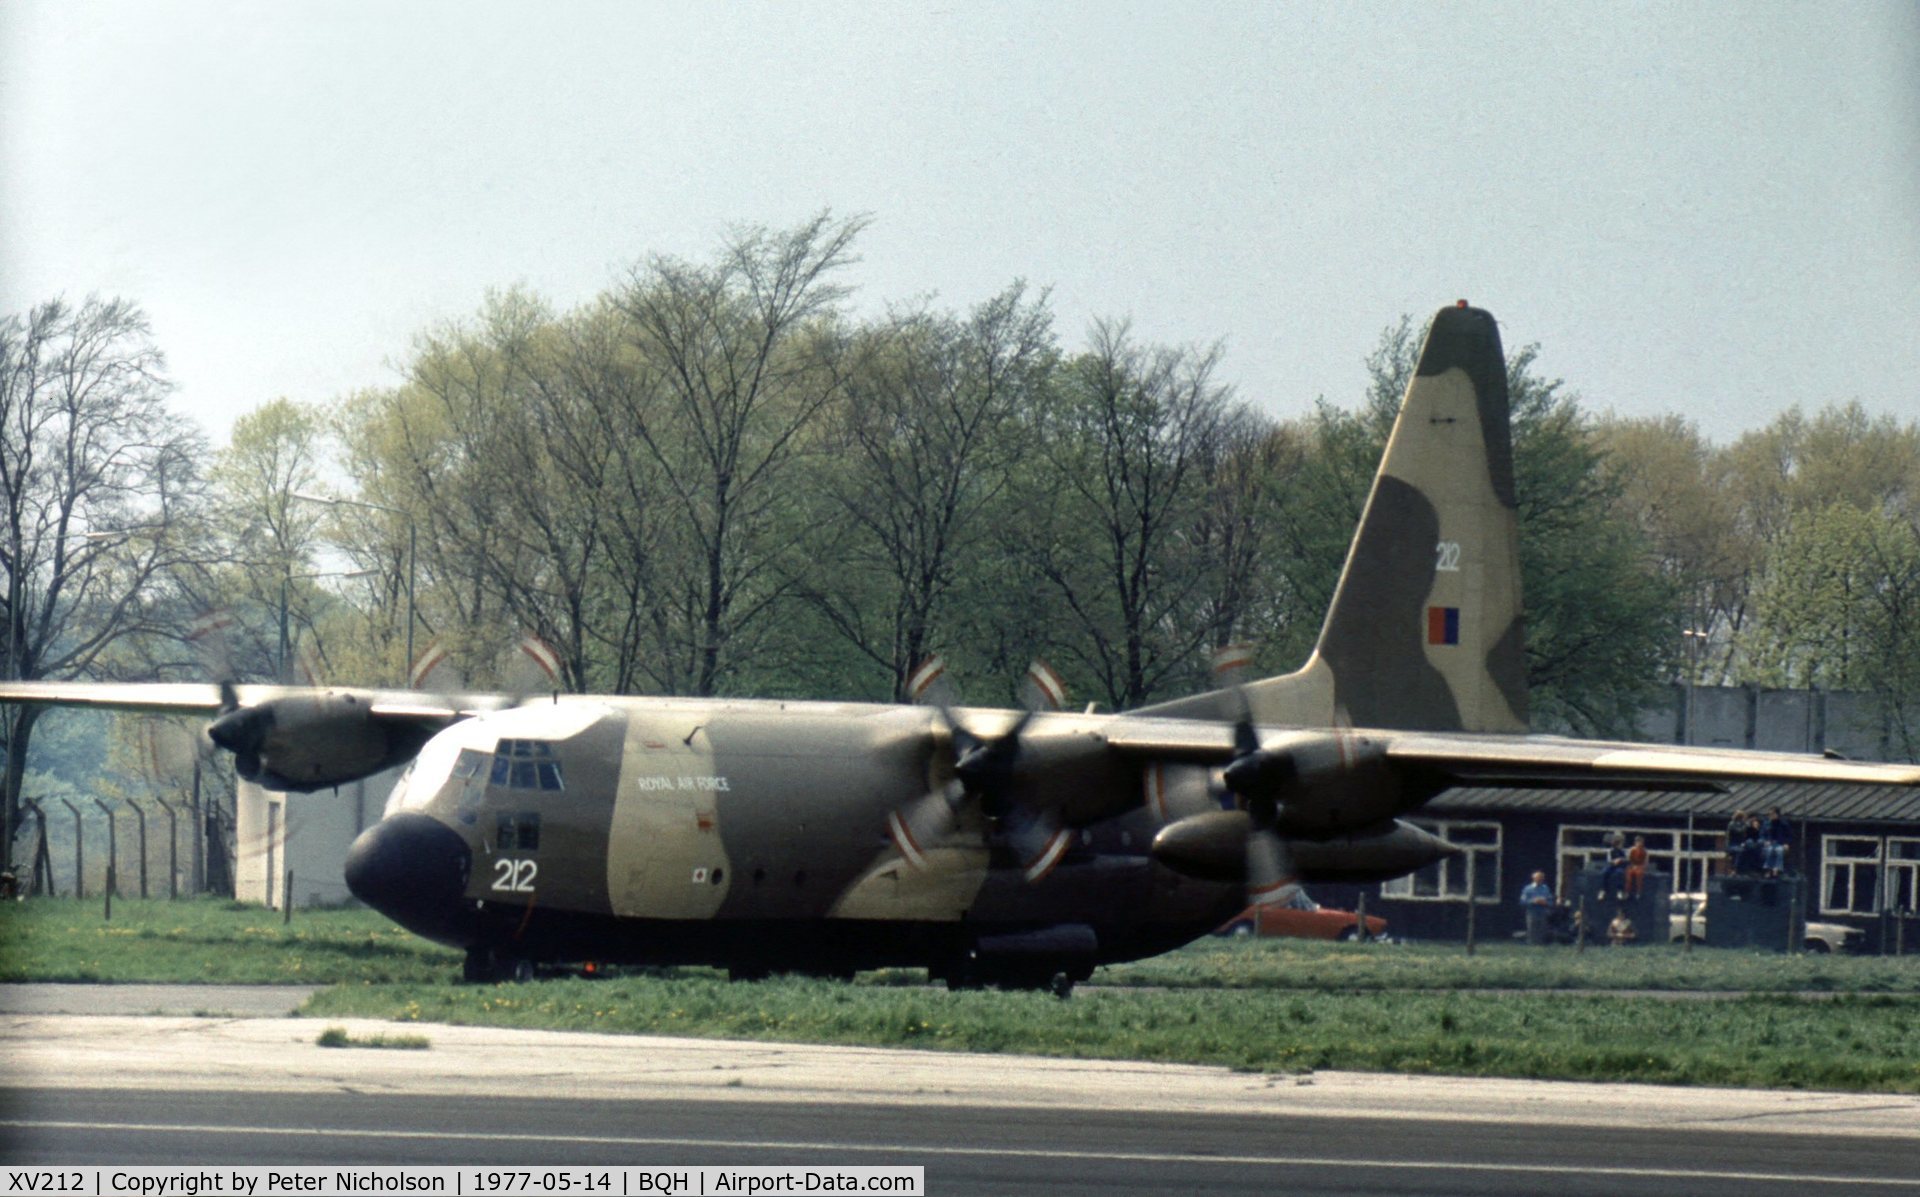 XV212, 1967 Lockheed C-130K Hercules C.1 C/N 382-4238, Hercules C.1 of 47 Squadron was present at the 1977 Biggin Hill Air Fair.